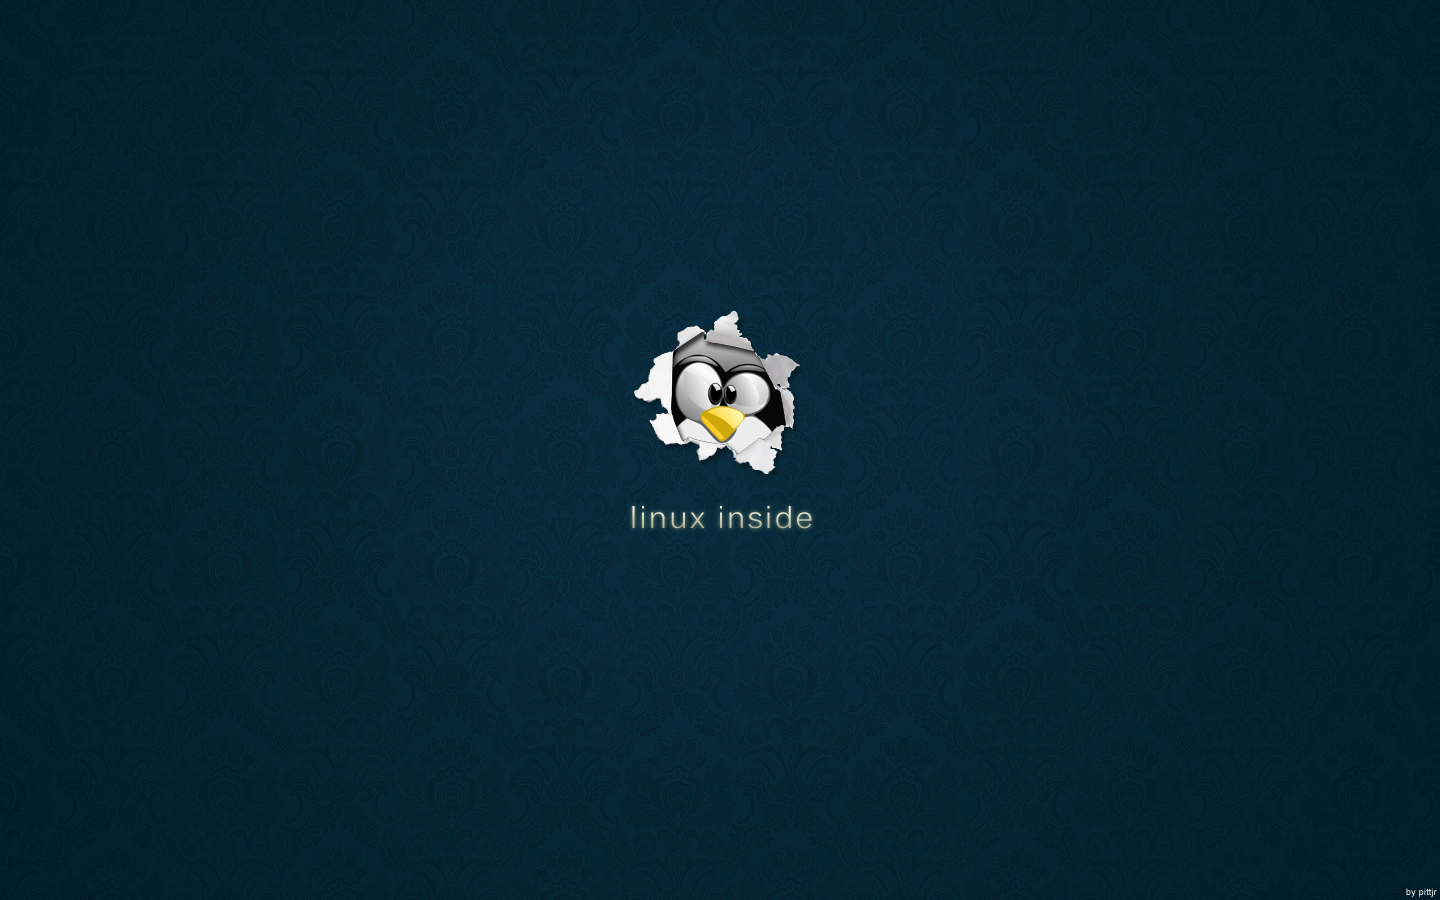 Linux Tux Penguins : Desktop and mobile wallpaper : Wallippo